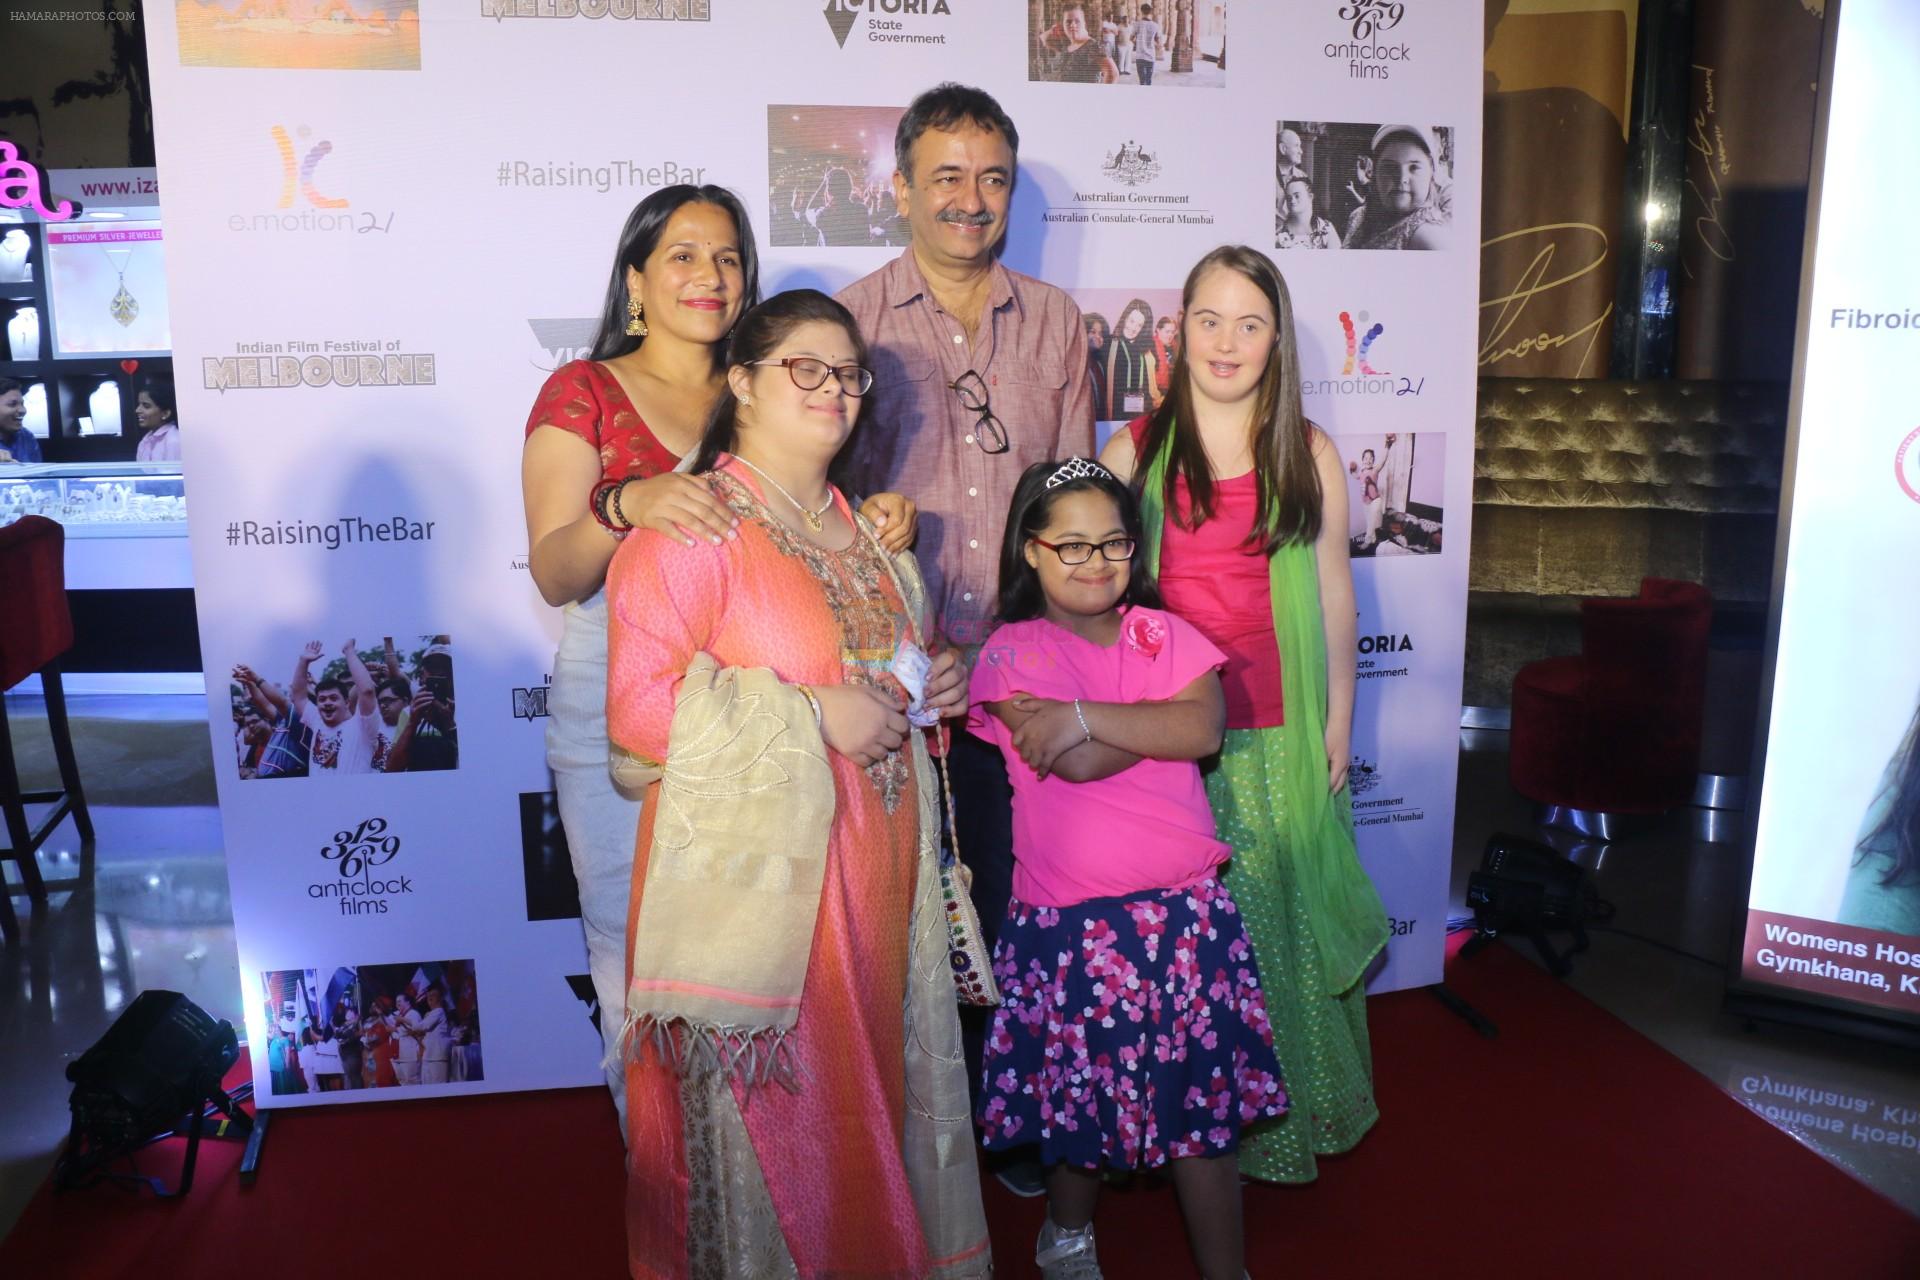 Rajkumar Hirani at the Screening Of Onir's Documentary On Kids With Down Syndrome